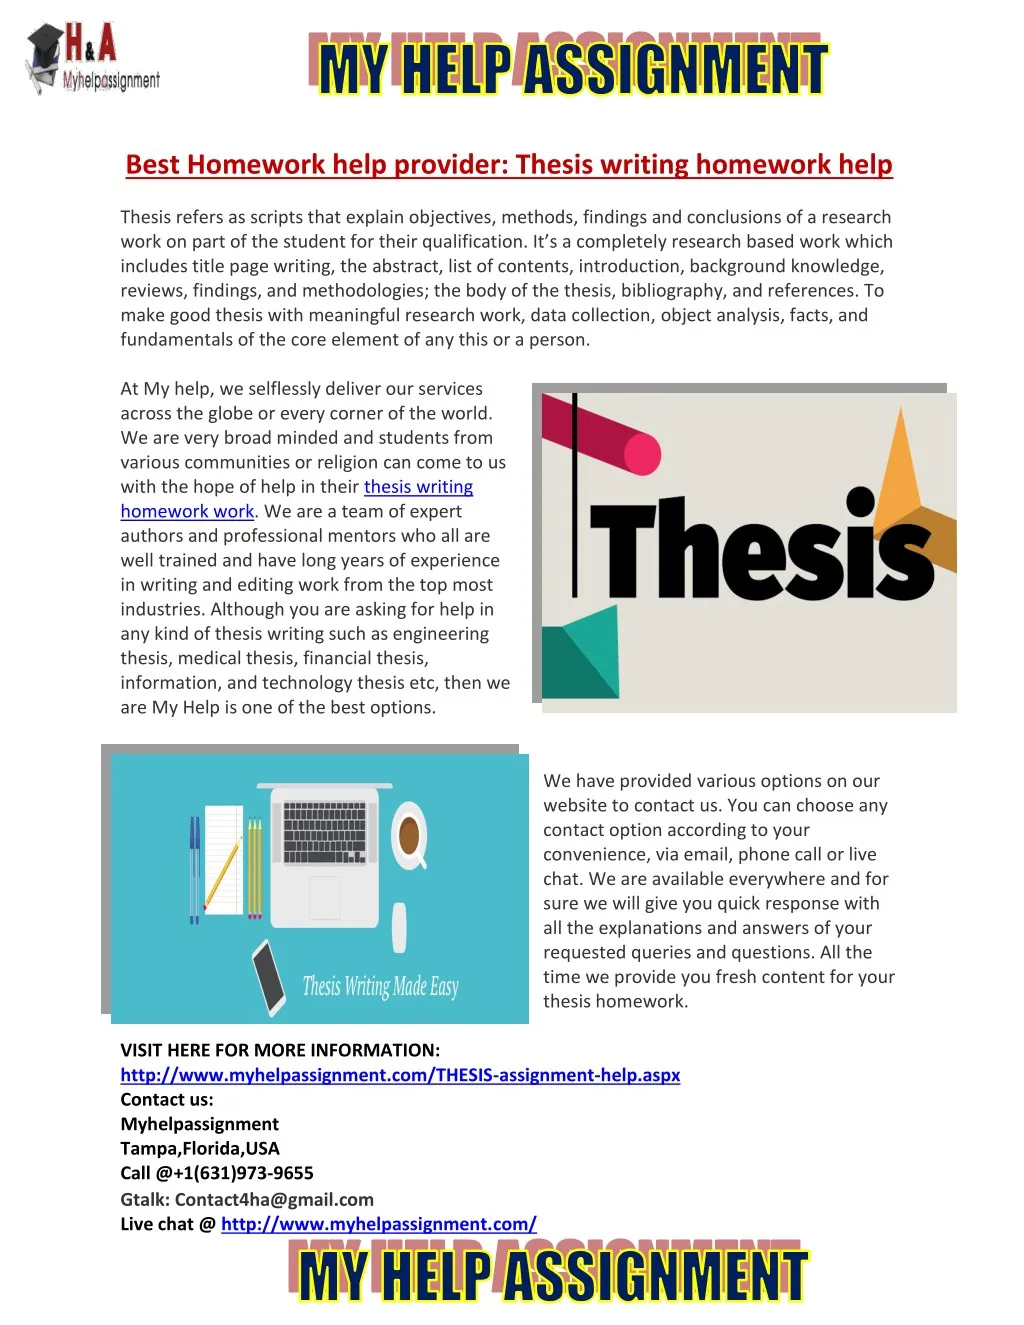 best homework help provider thesis writing